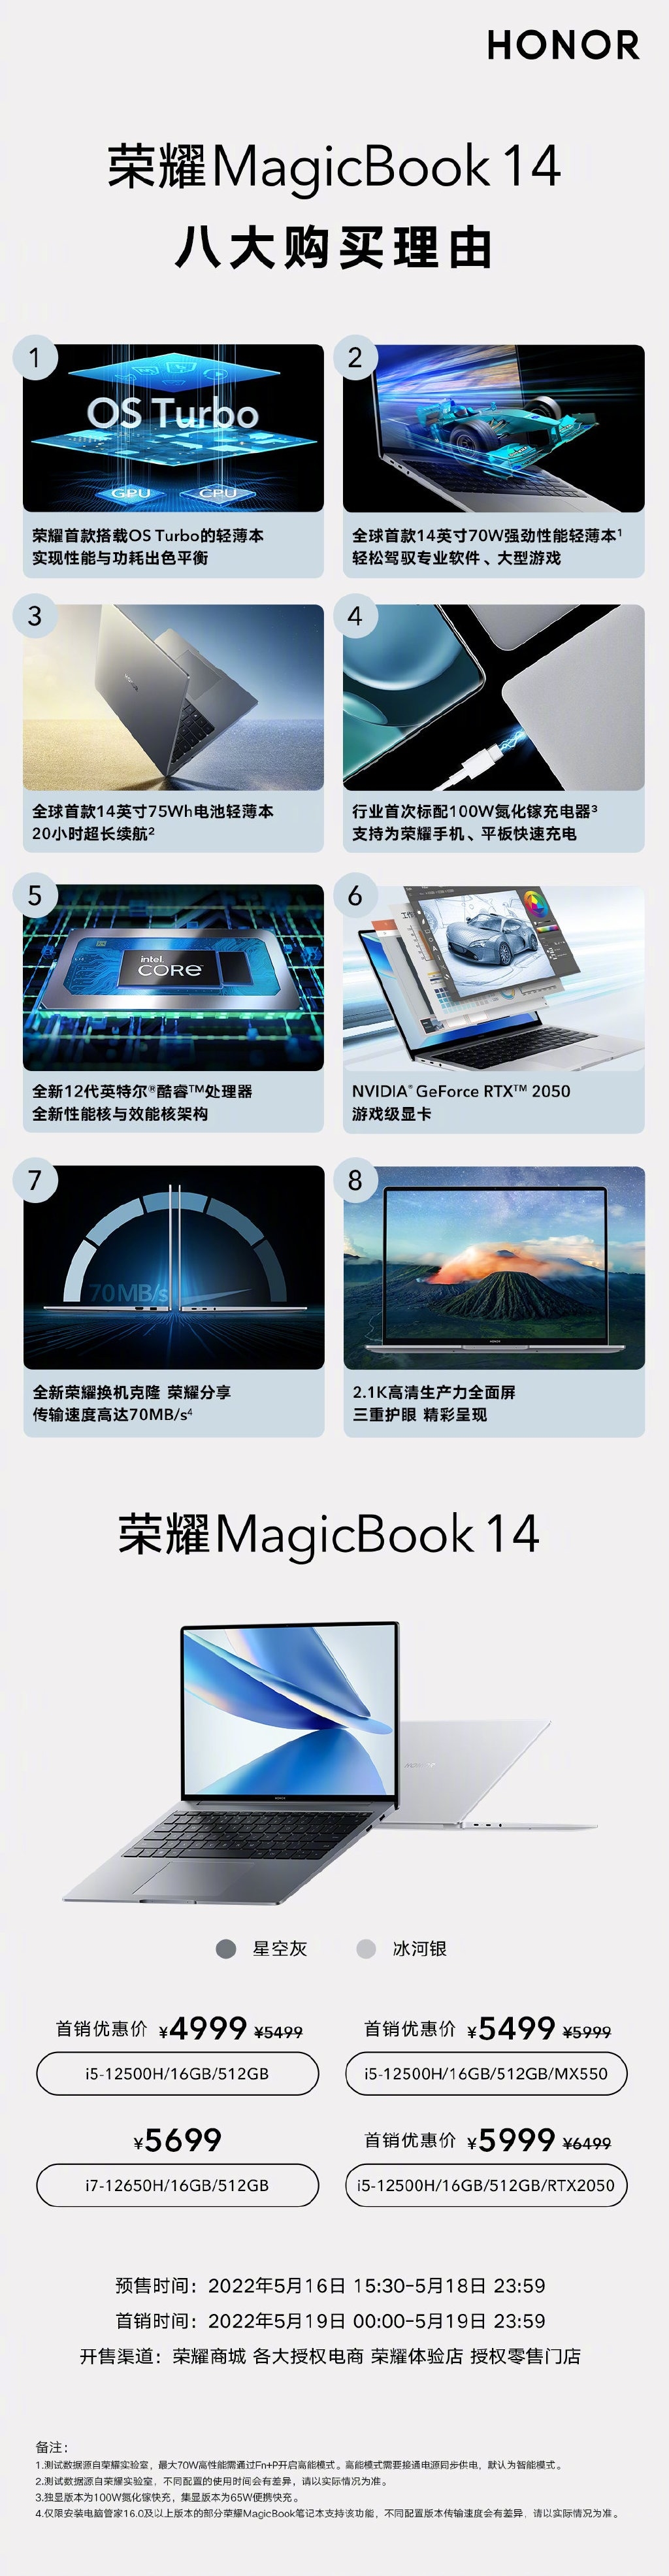 全球首搭OS Turbo技術 榮耀MagicBook 14今晚首銷：4999元起